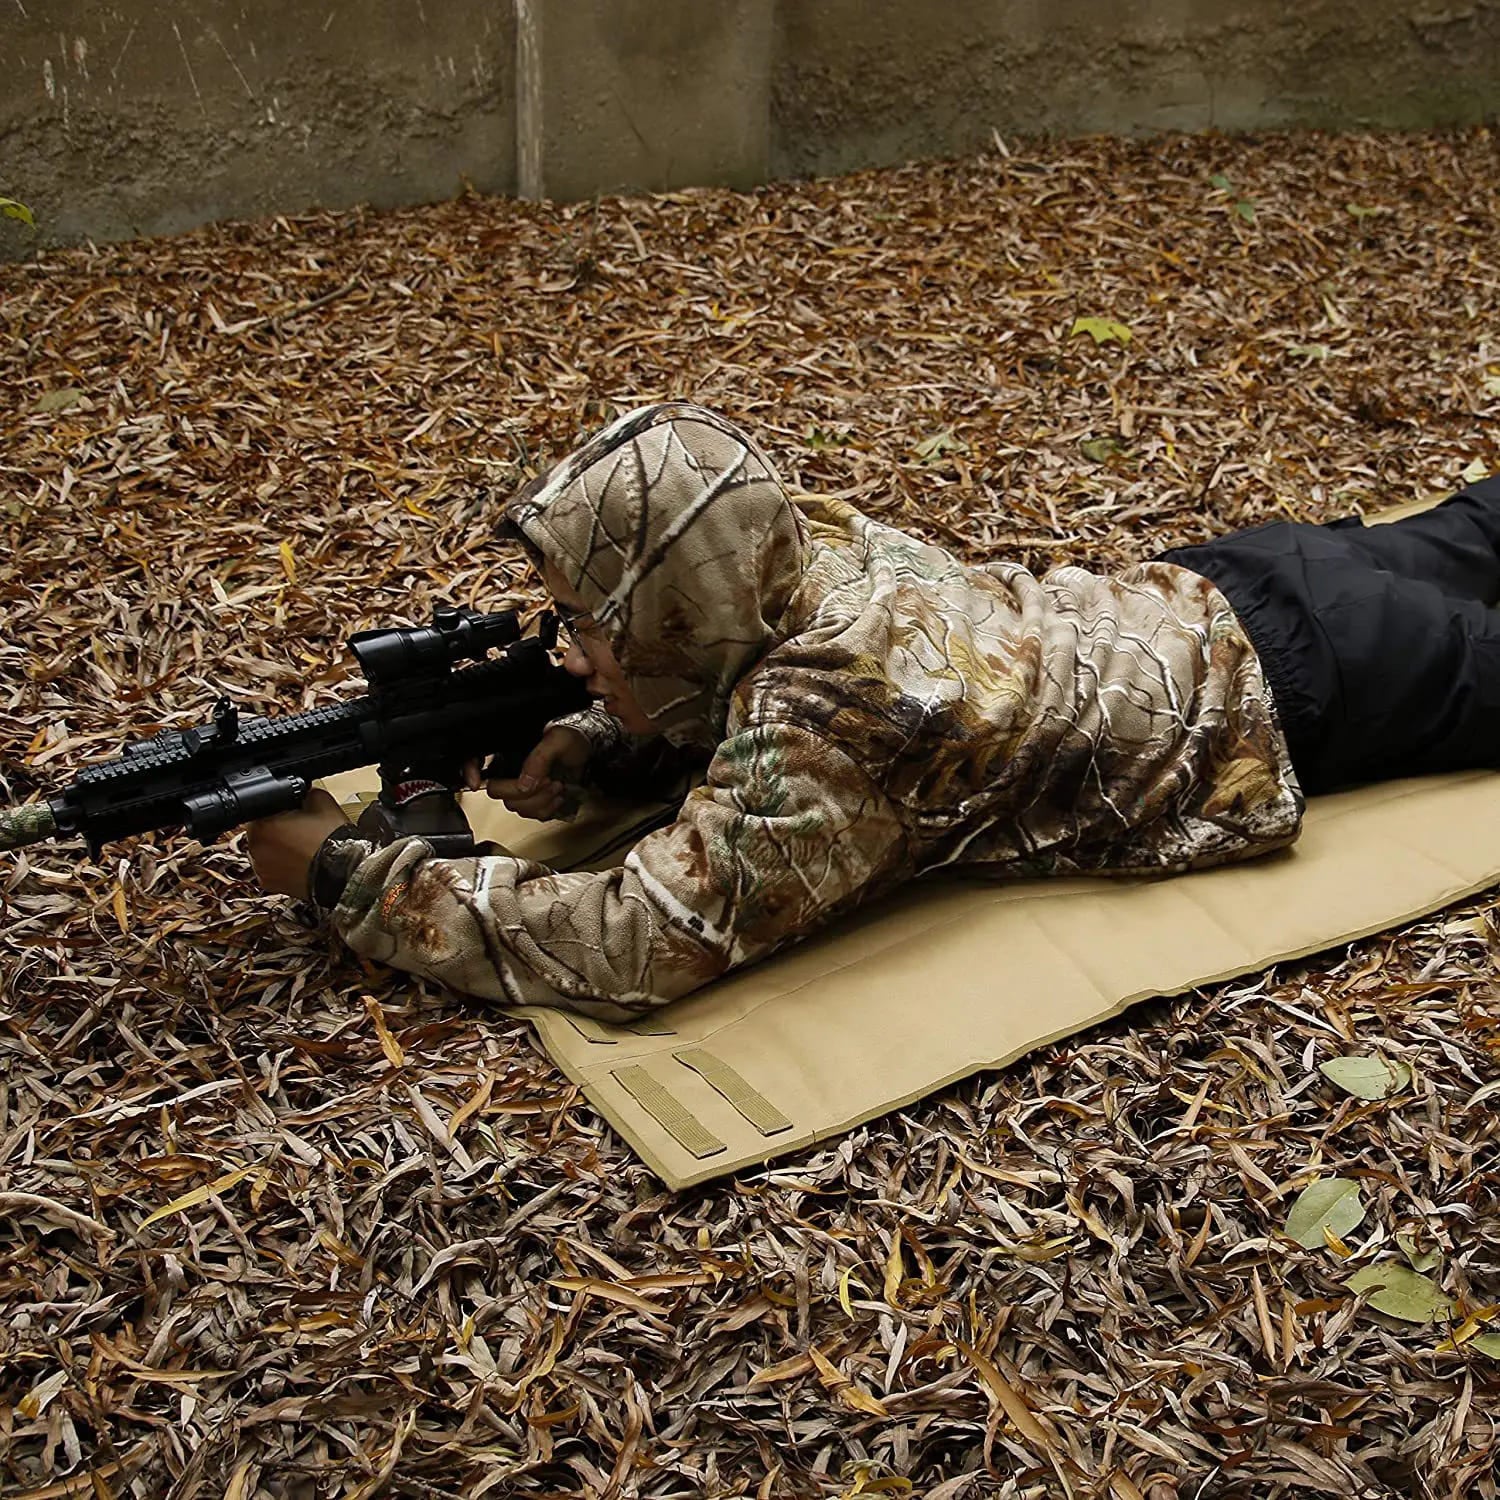 Tactical Shooting Mat Roll-Up Portable